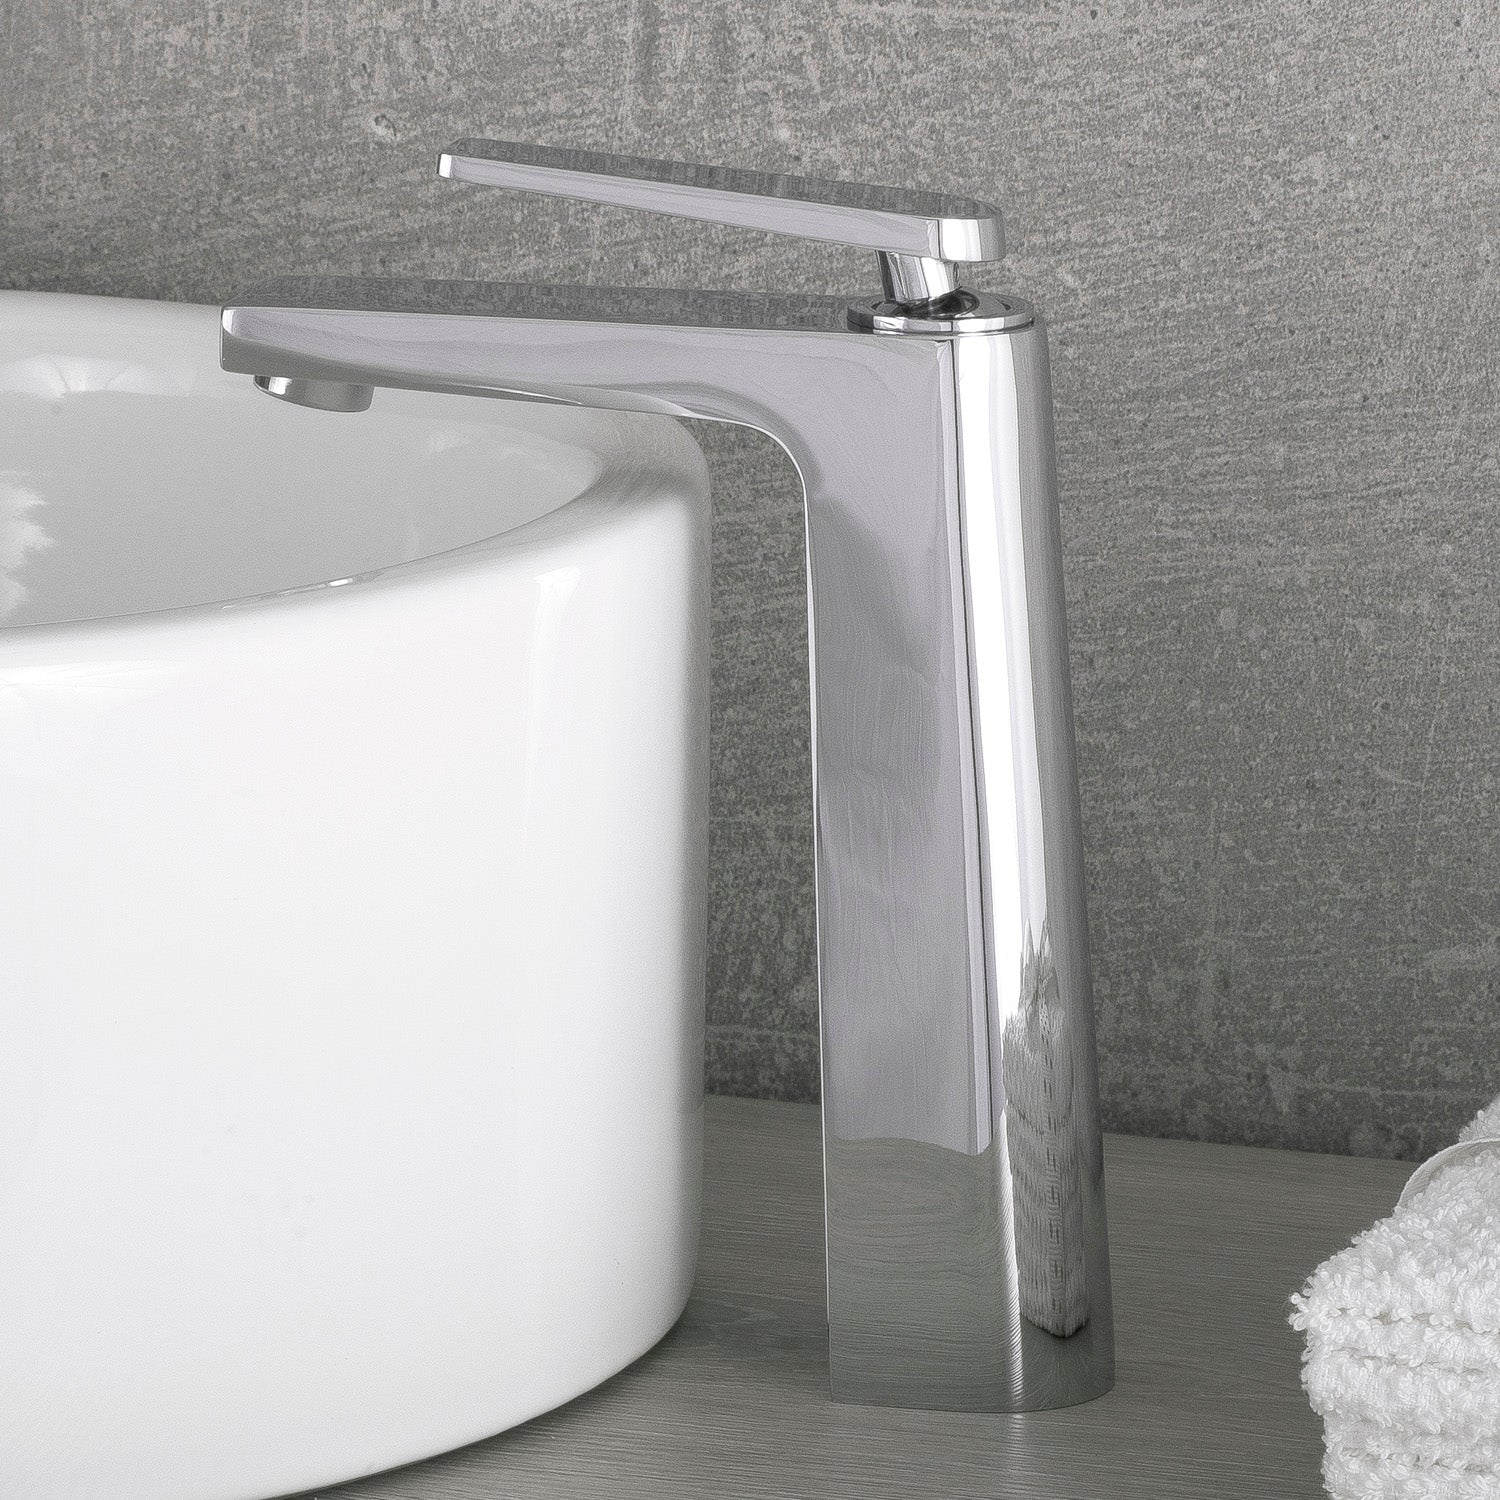 DAX Single Handle Vessel Sink Bathroom Faucet, Brass Body, Chrome Finish, 4-1/16 x 9-1/16 Inches (DAX-9802A)